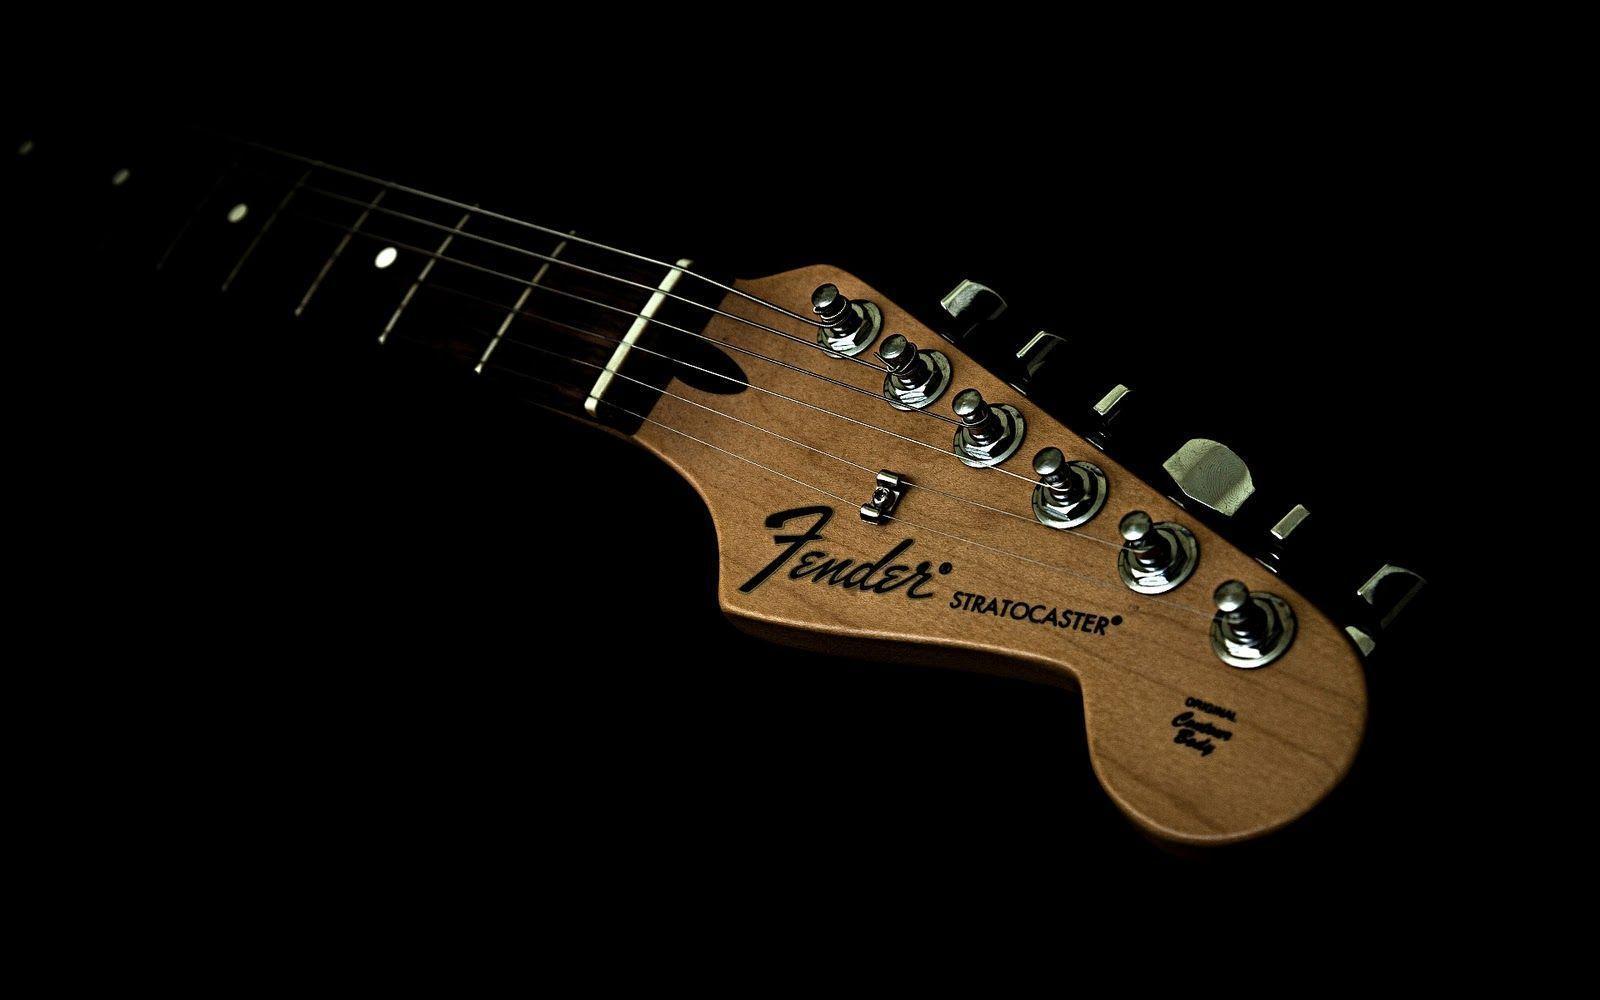 Fender Stratoccaster Guitar Desktop Wallpaper